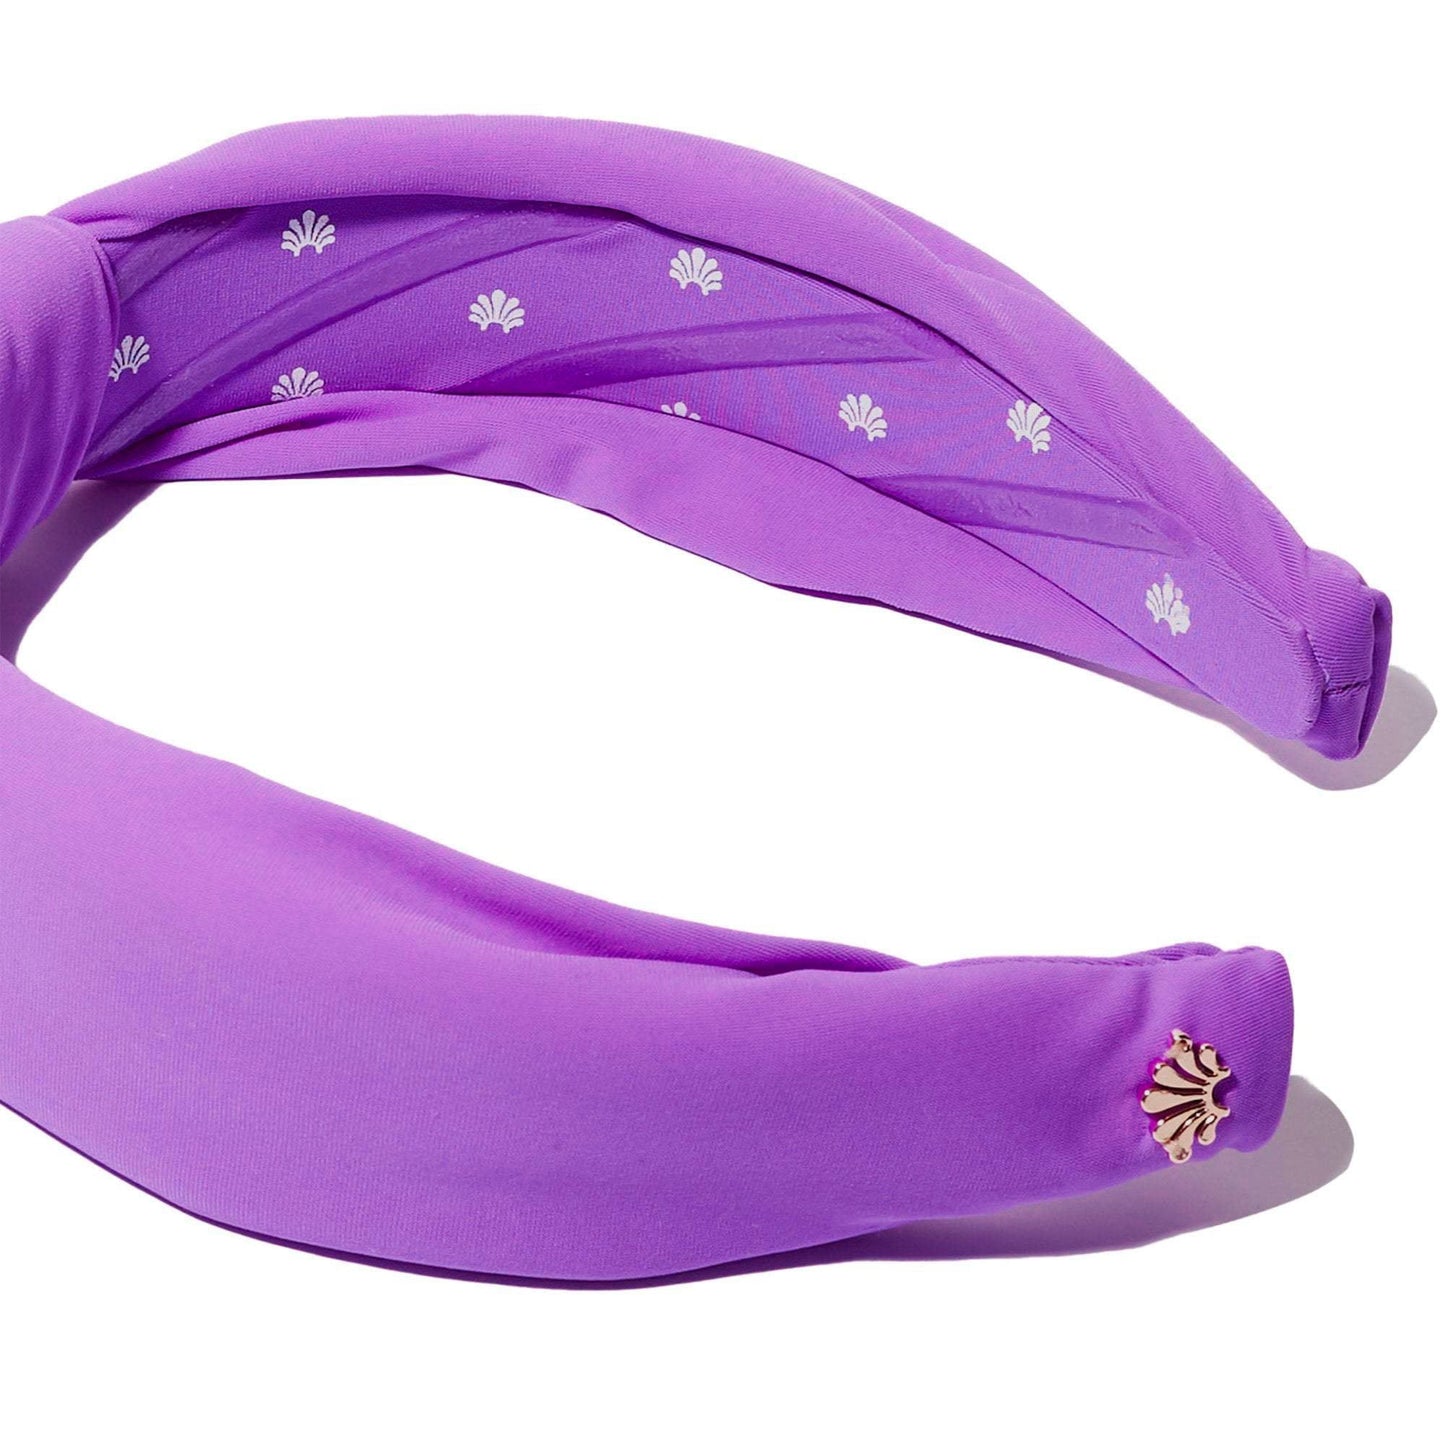 Lele Sadoughi Orchid Neoprene Knotted Headband